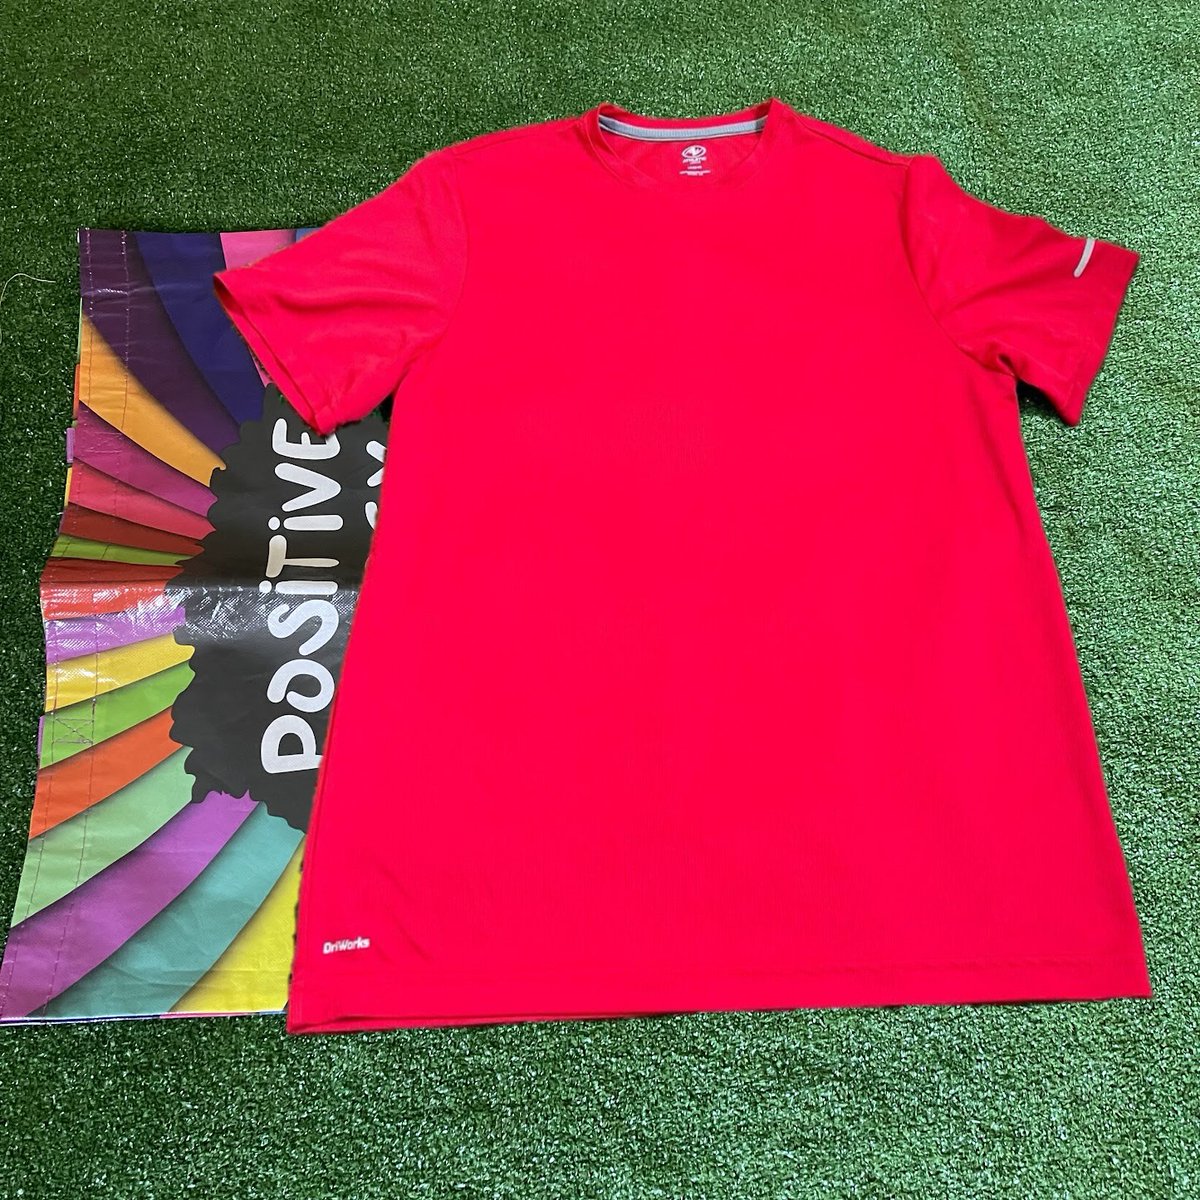 Athletic Works Crew Neck Short Sleeve Quick Dry Running Red T-shirts Size L

#AthleticWorksFashion
#QuickDryTee
#RunningGear
#CrewNeckStyle
#ShortSleeveTee
#RedTShirt
#SizeL
#SportyStyle
#ActiveWear
#FitnessFashion
ebay.com/itm/1263876270…